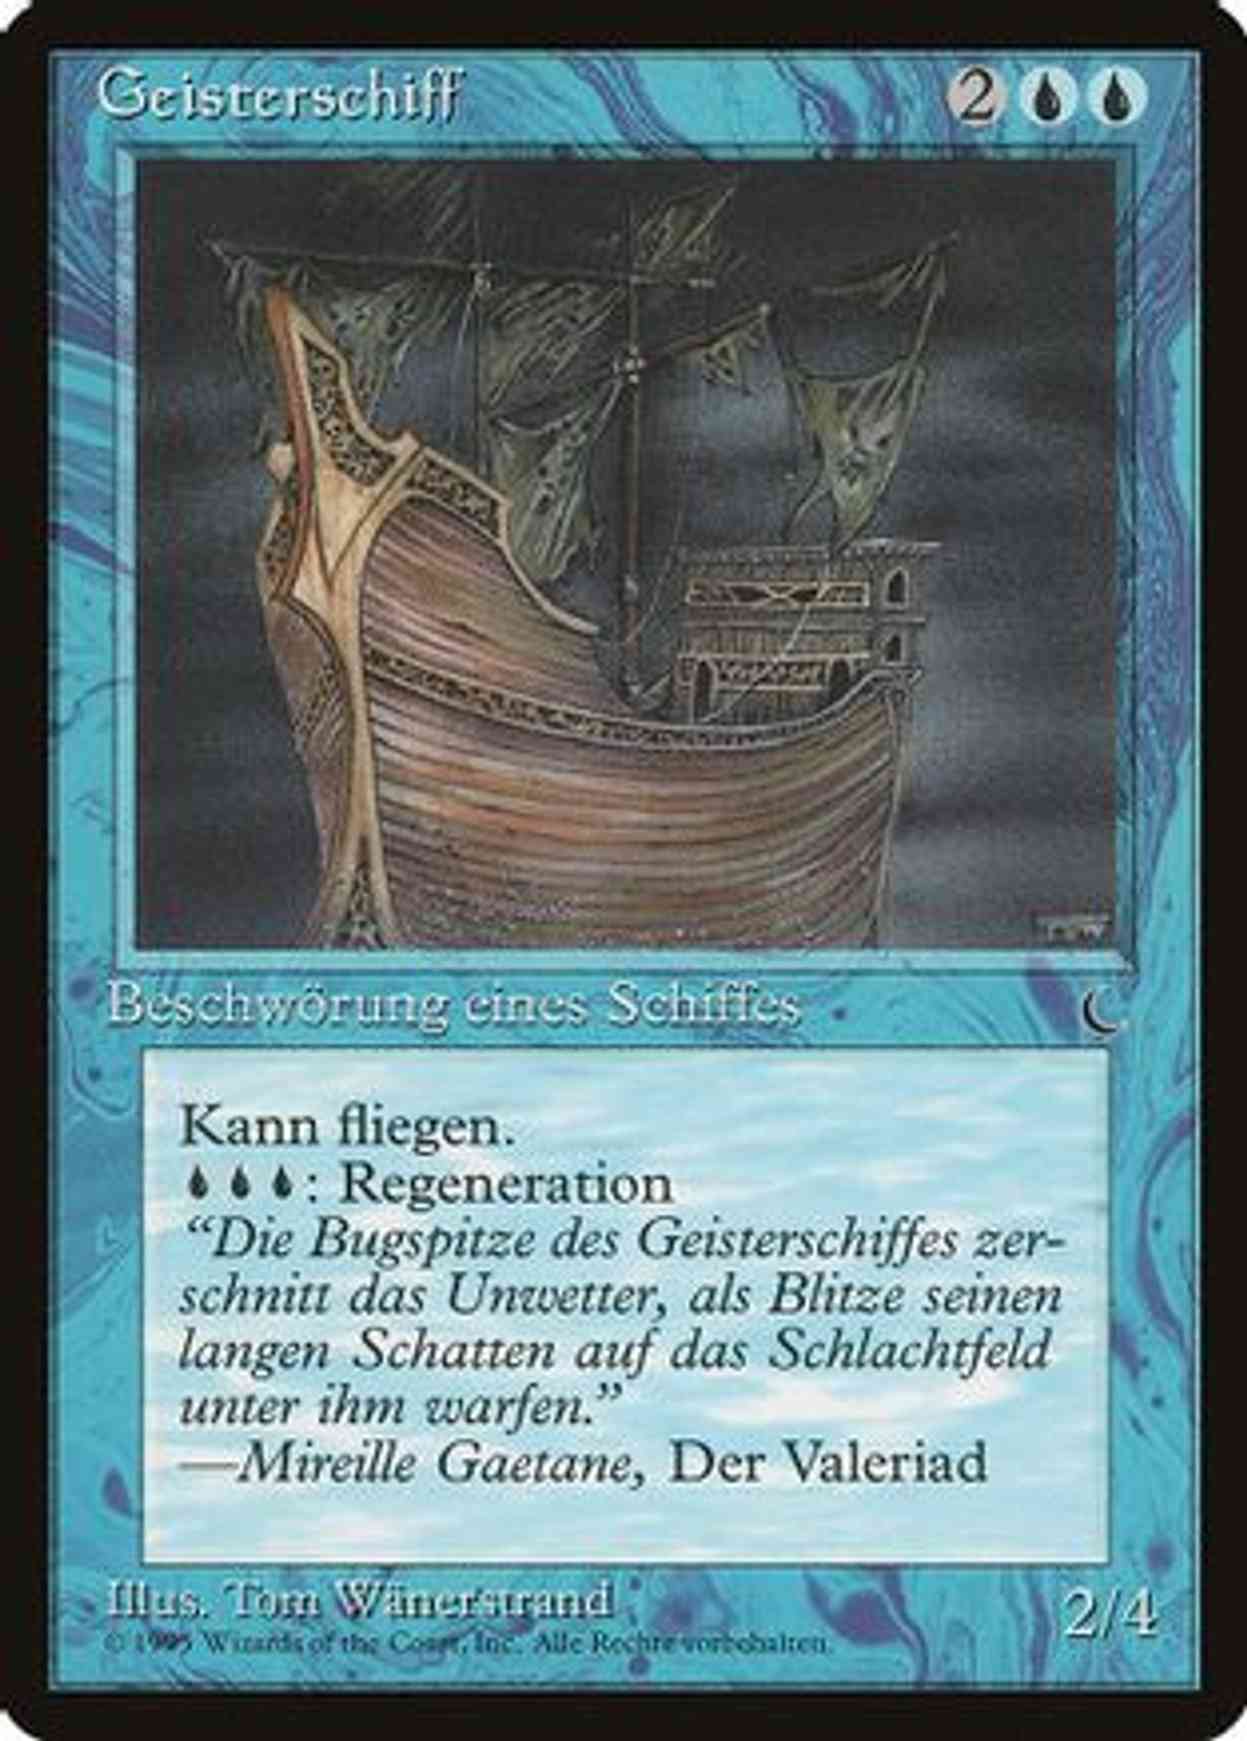 Ghost Ship (German) - "Geisterschiff" magic card front